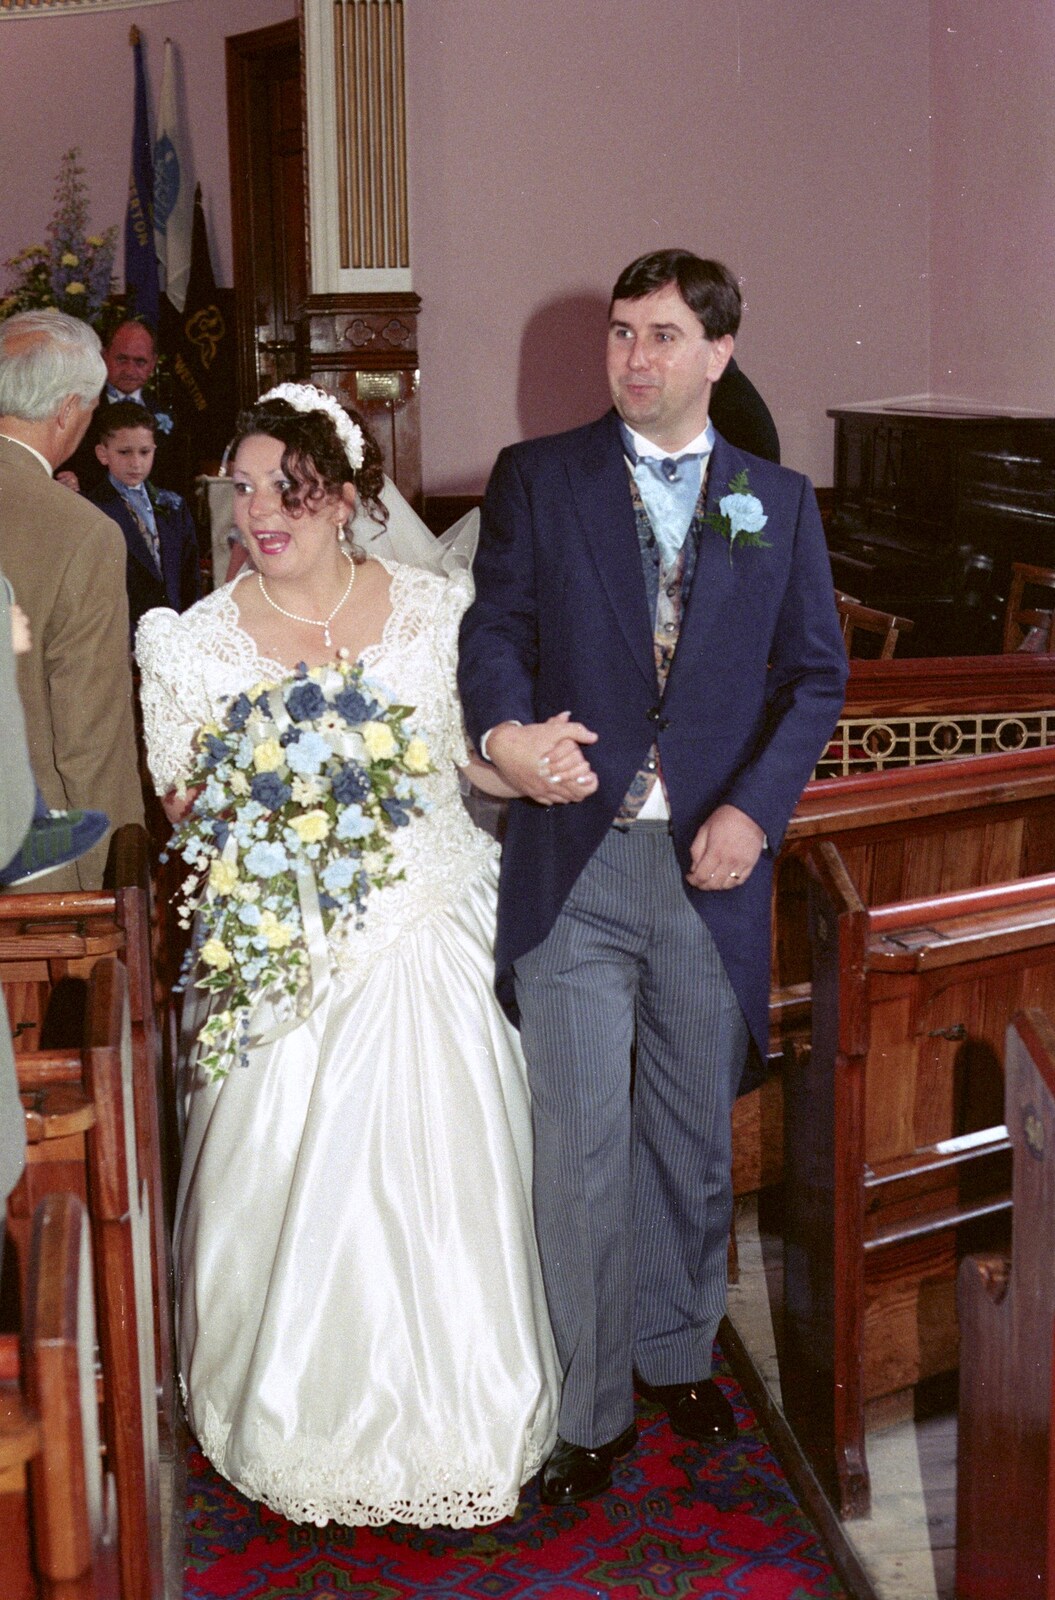 Riki's Wedding, Treboeth, Swansea - 7th May 1996: Riki and his new wife walk down the aisle